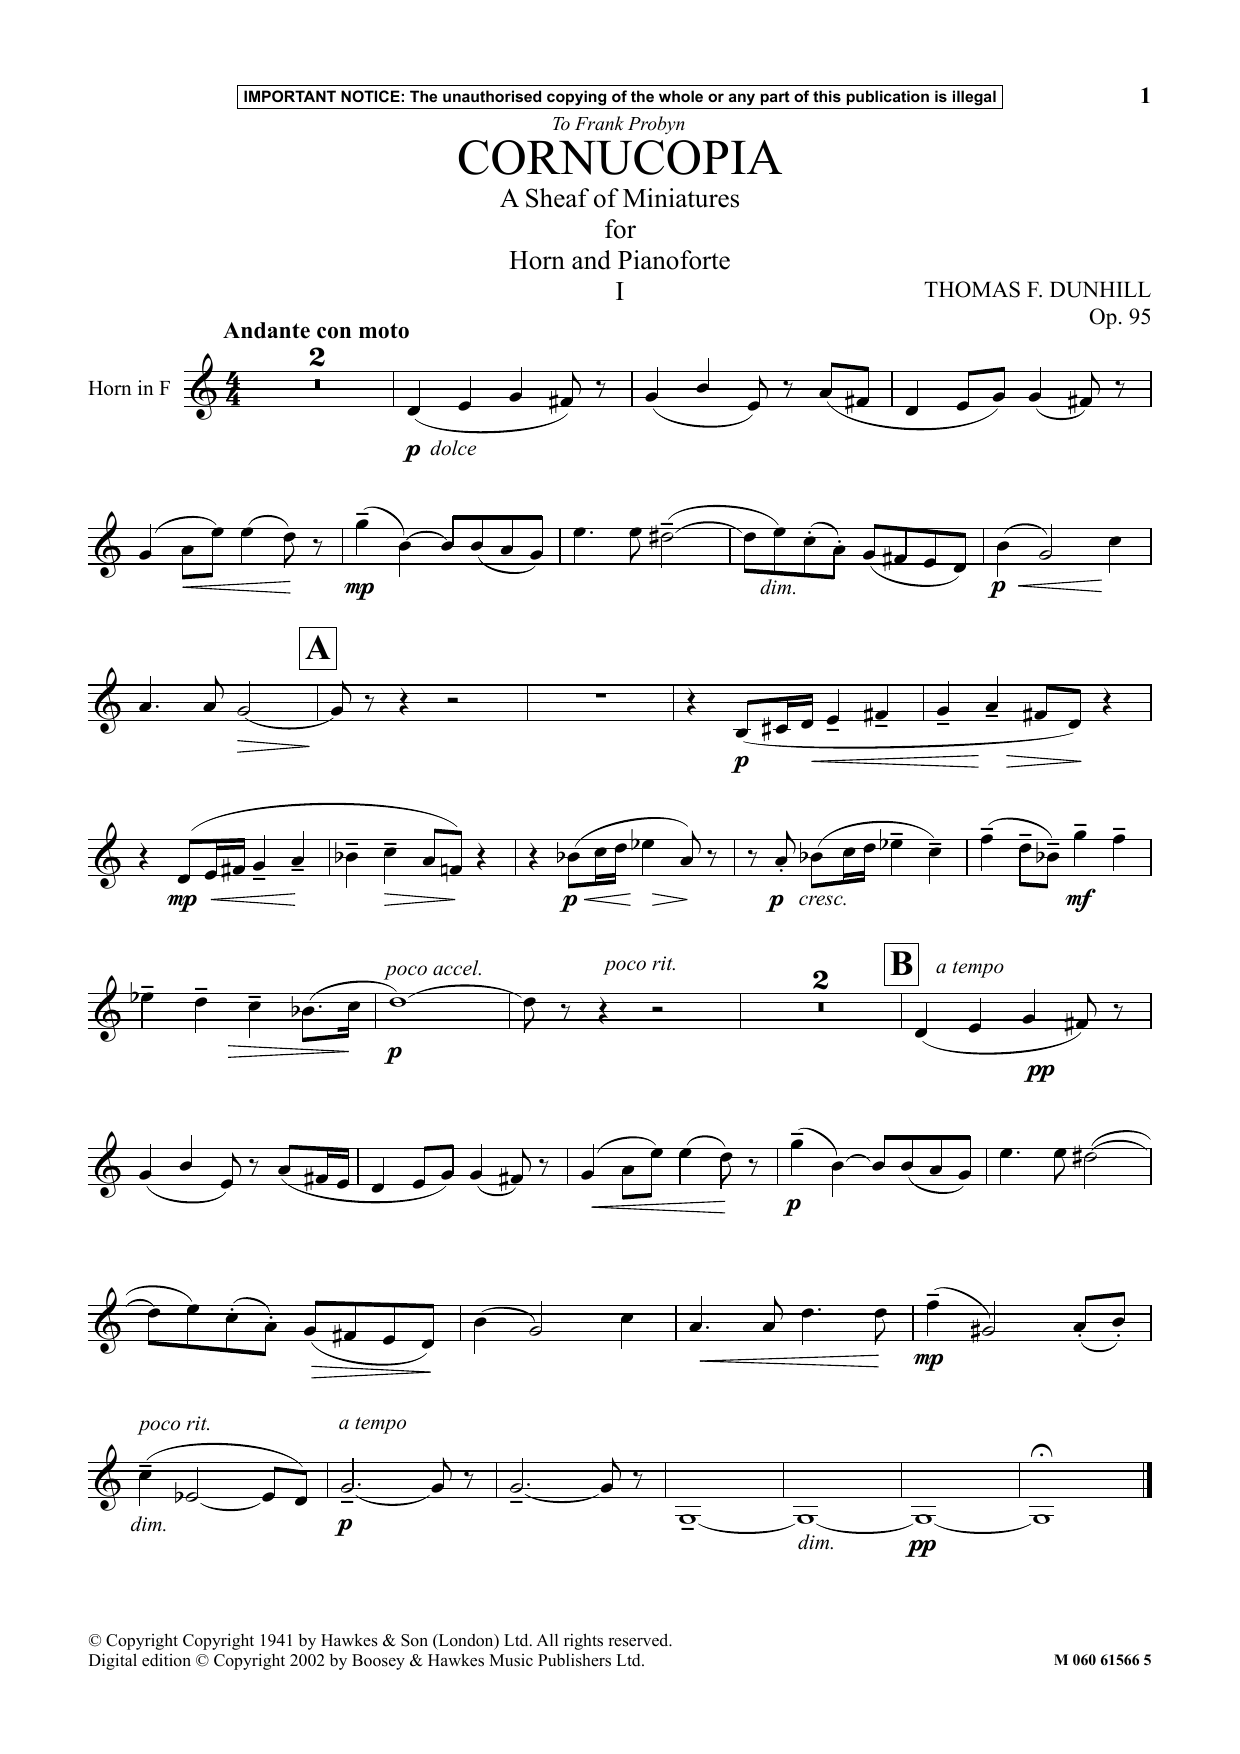 Cornucopia - A Sheaf Of Miniatures For Horn And Pianoforte (I) (Instrumental Solo) von Thomas F. Dunhill